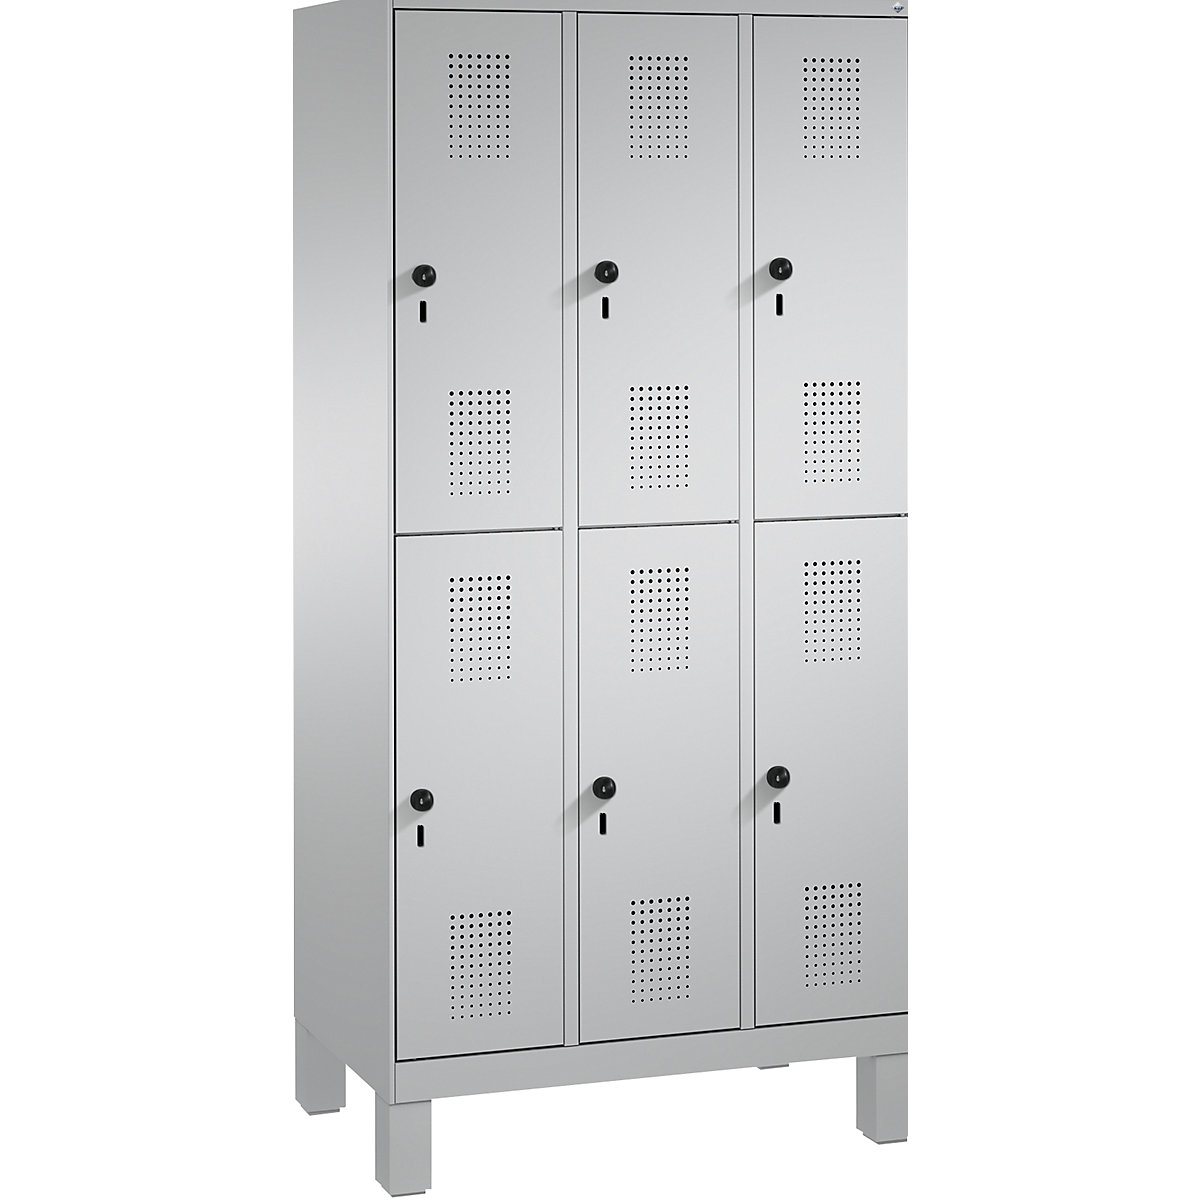 EVOLO cloakroom locker, double tier, with feet – C+P, 3 compartments, 2 shelf compartments each, compartment width 300 mm, white aluminium / white aluminium-13